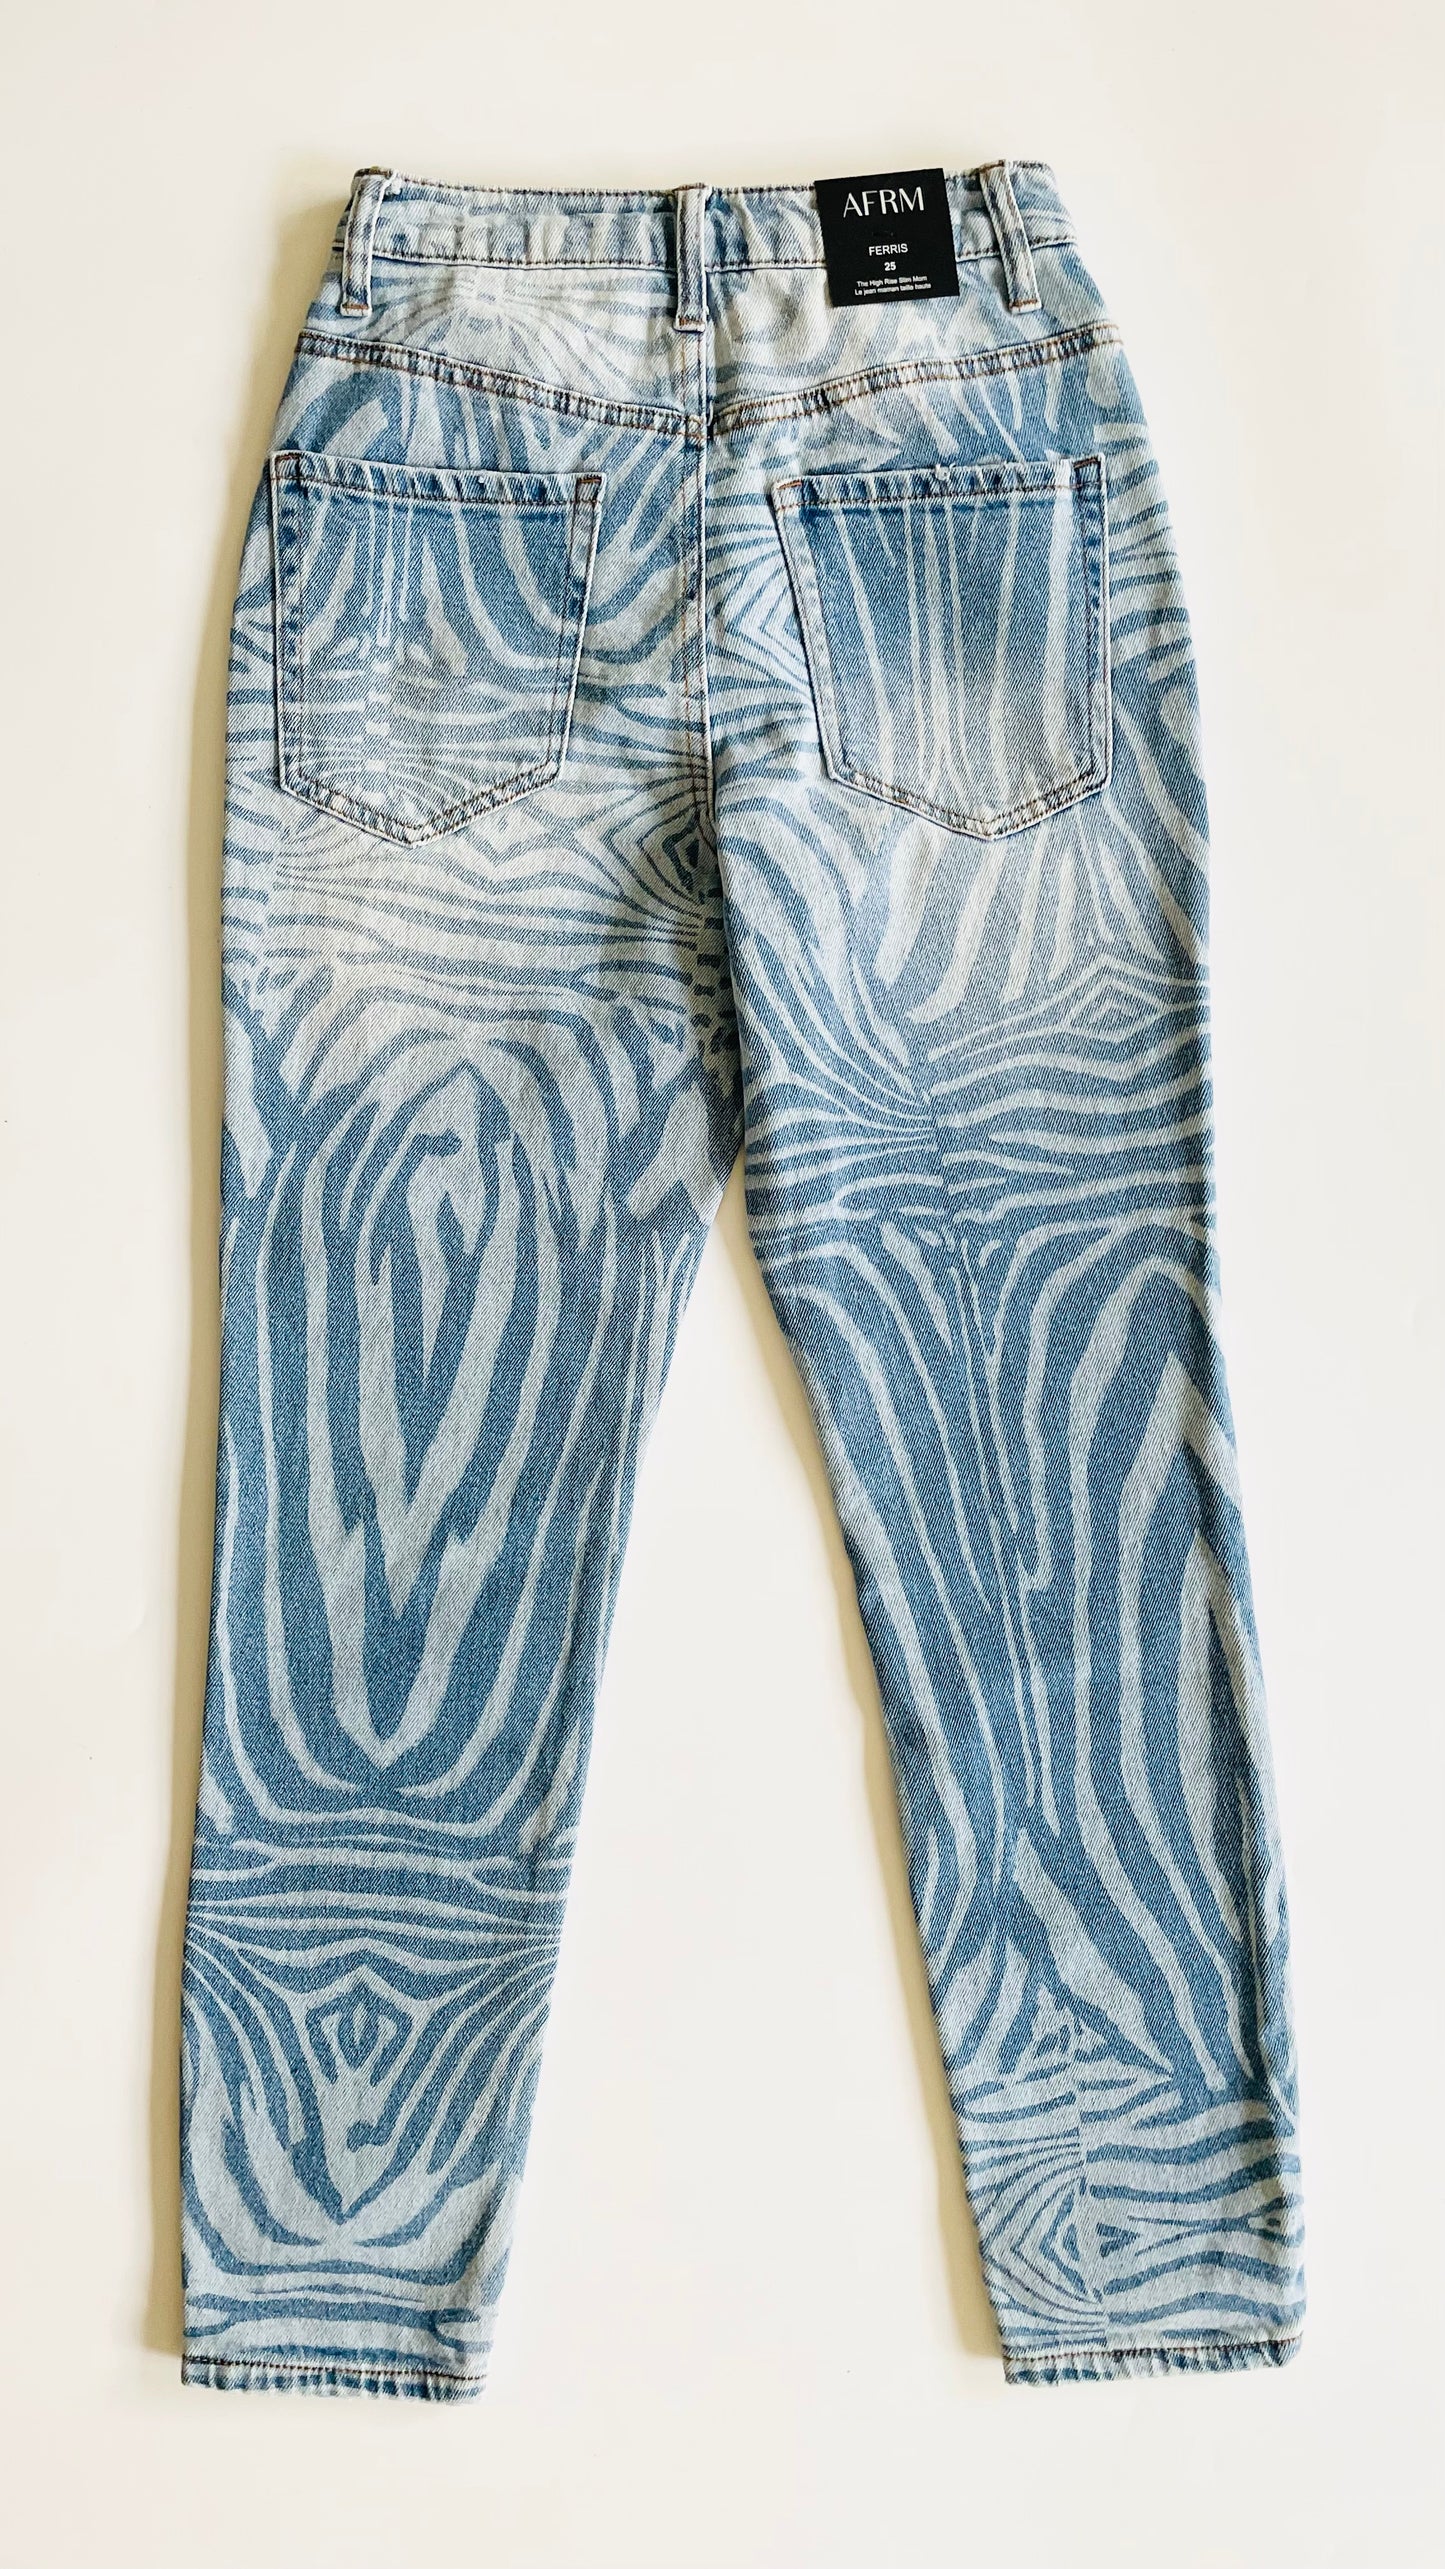 Pre-Loved AFRM blue zebra print slim fit jeans - Size 25 x 28